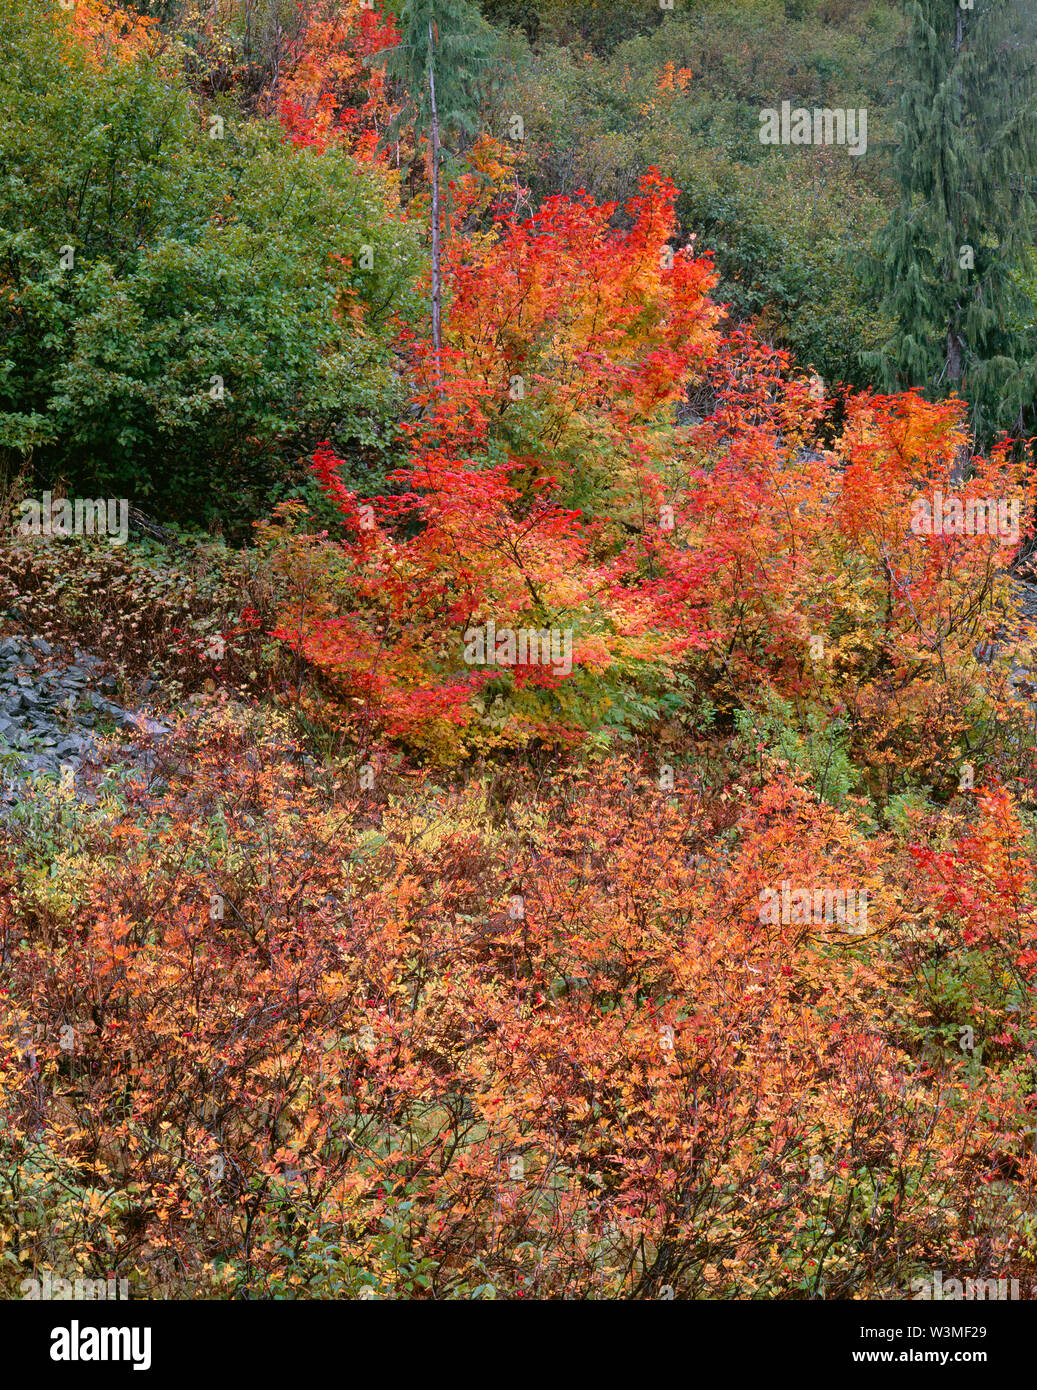 USA, Washington, Mt. Rainier National Park, Autumn colored mountain ash and vine maple. Stock Photo